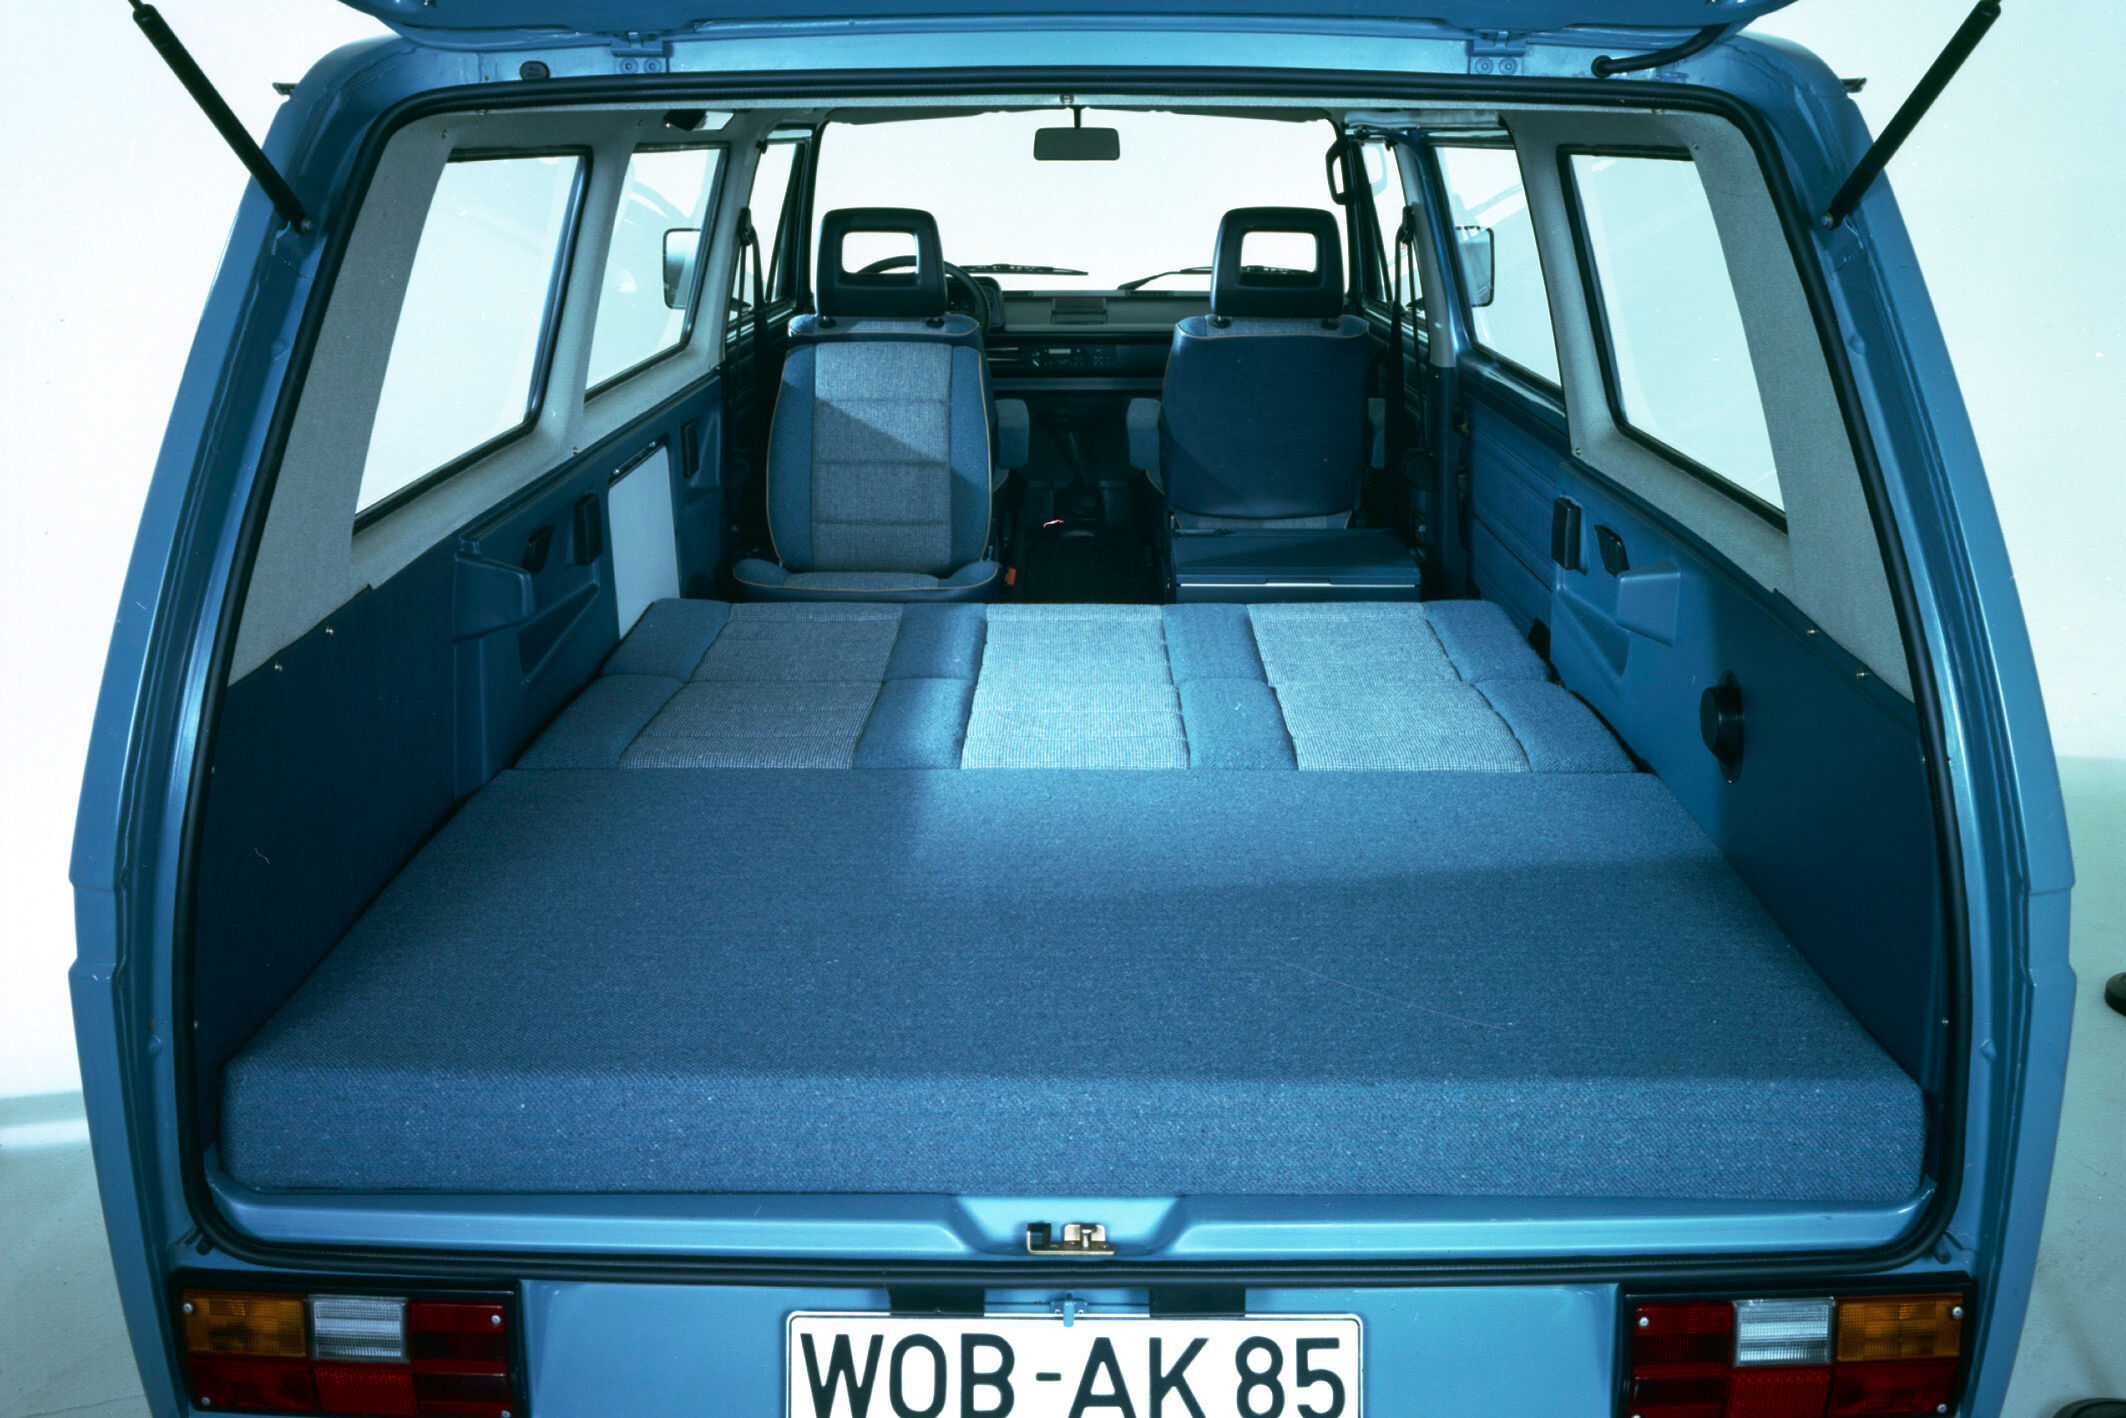 A cama da VW Multivan clássica.